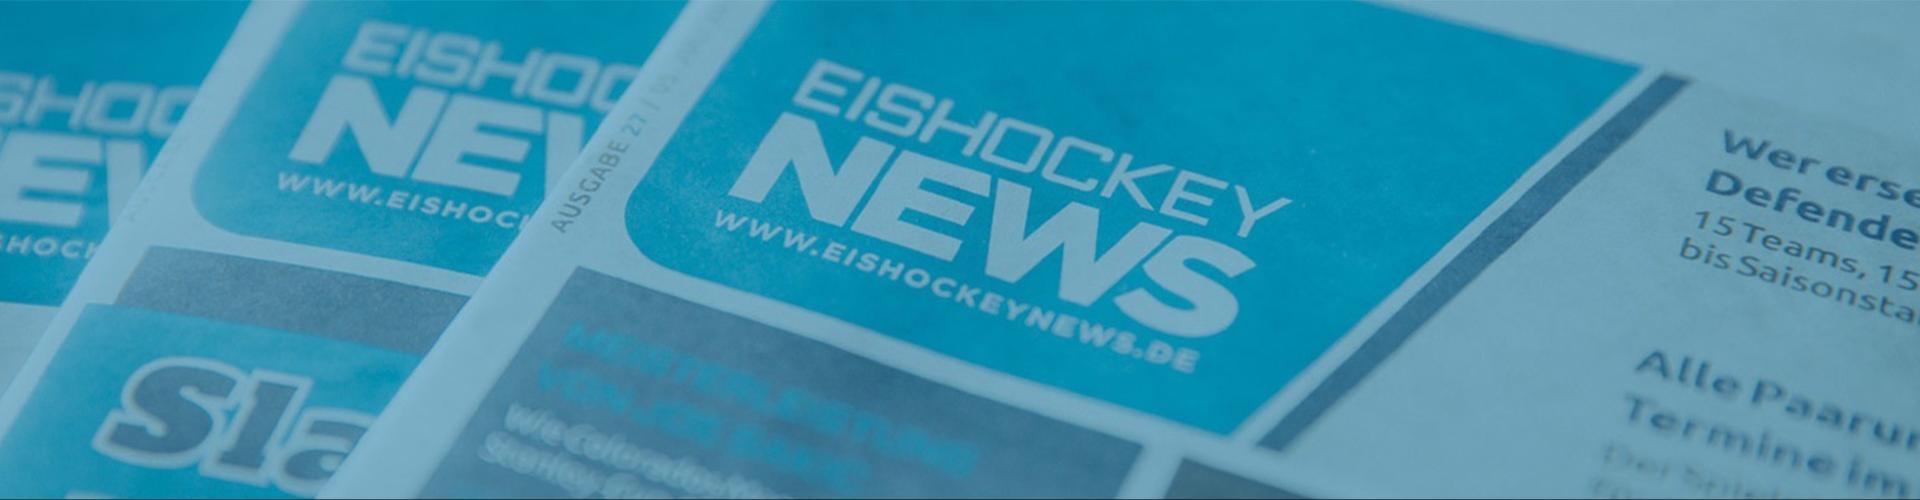 Eishockey NEWS GmbH & Co. KG cover